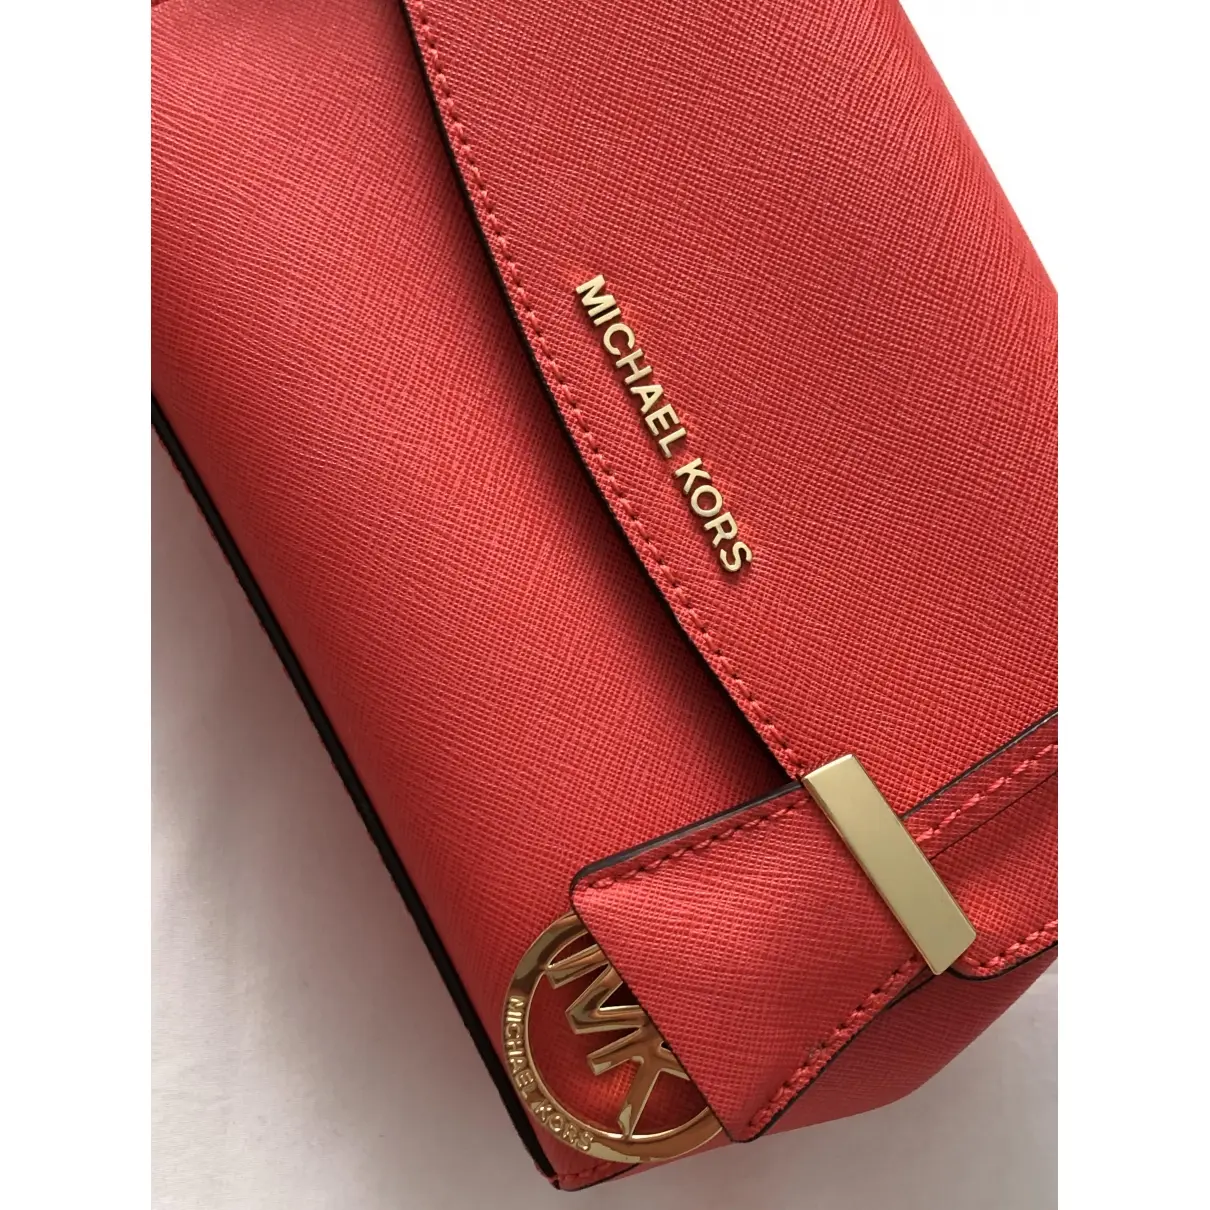 Michael Kors Ava leather crossbody bag for sale